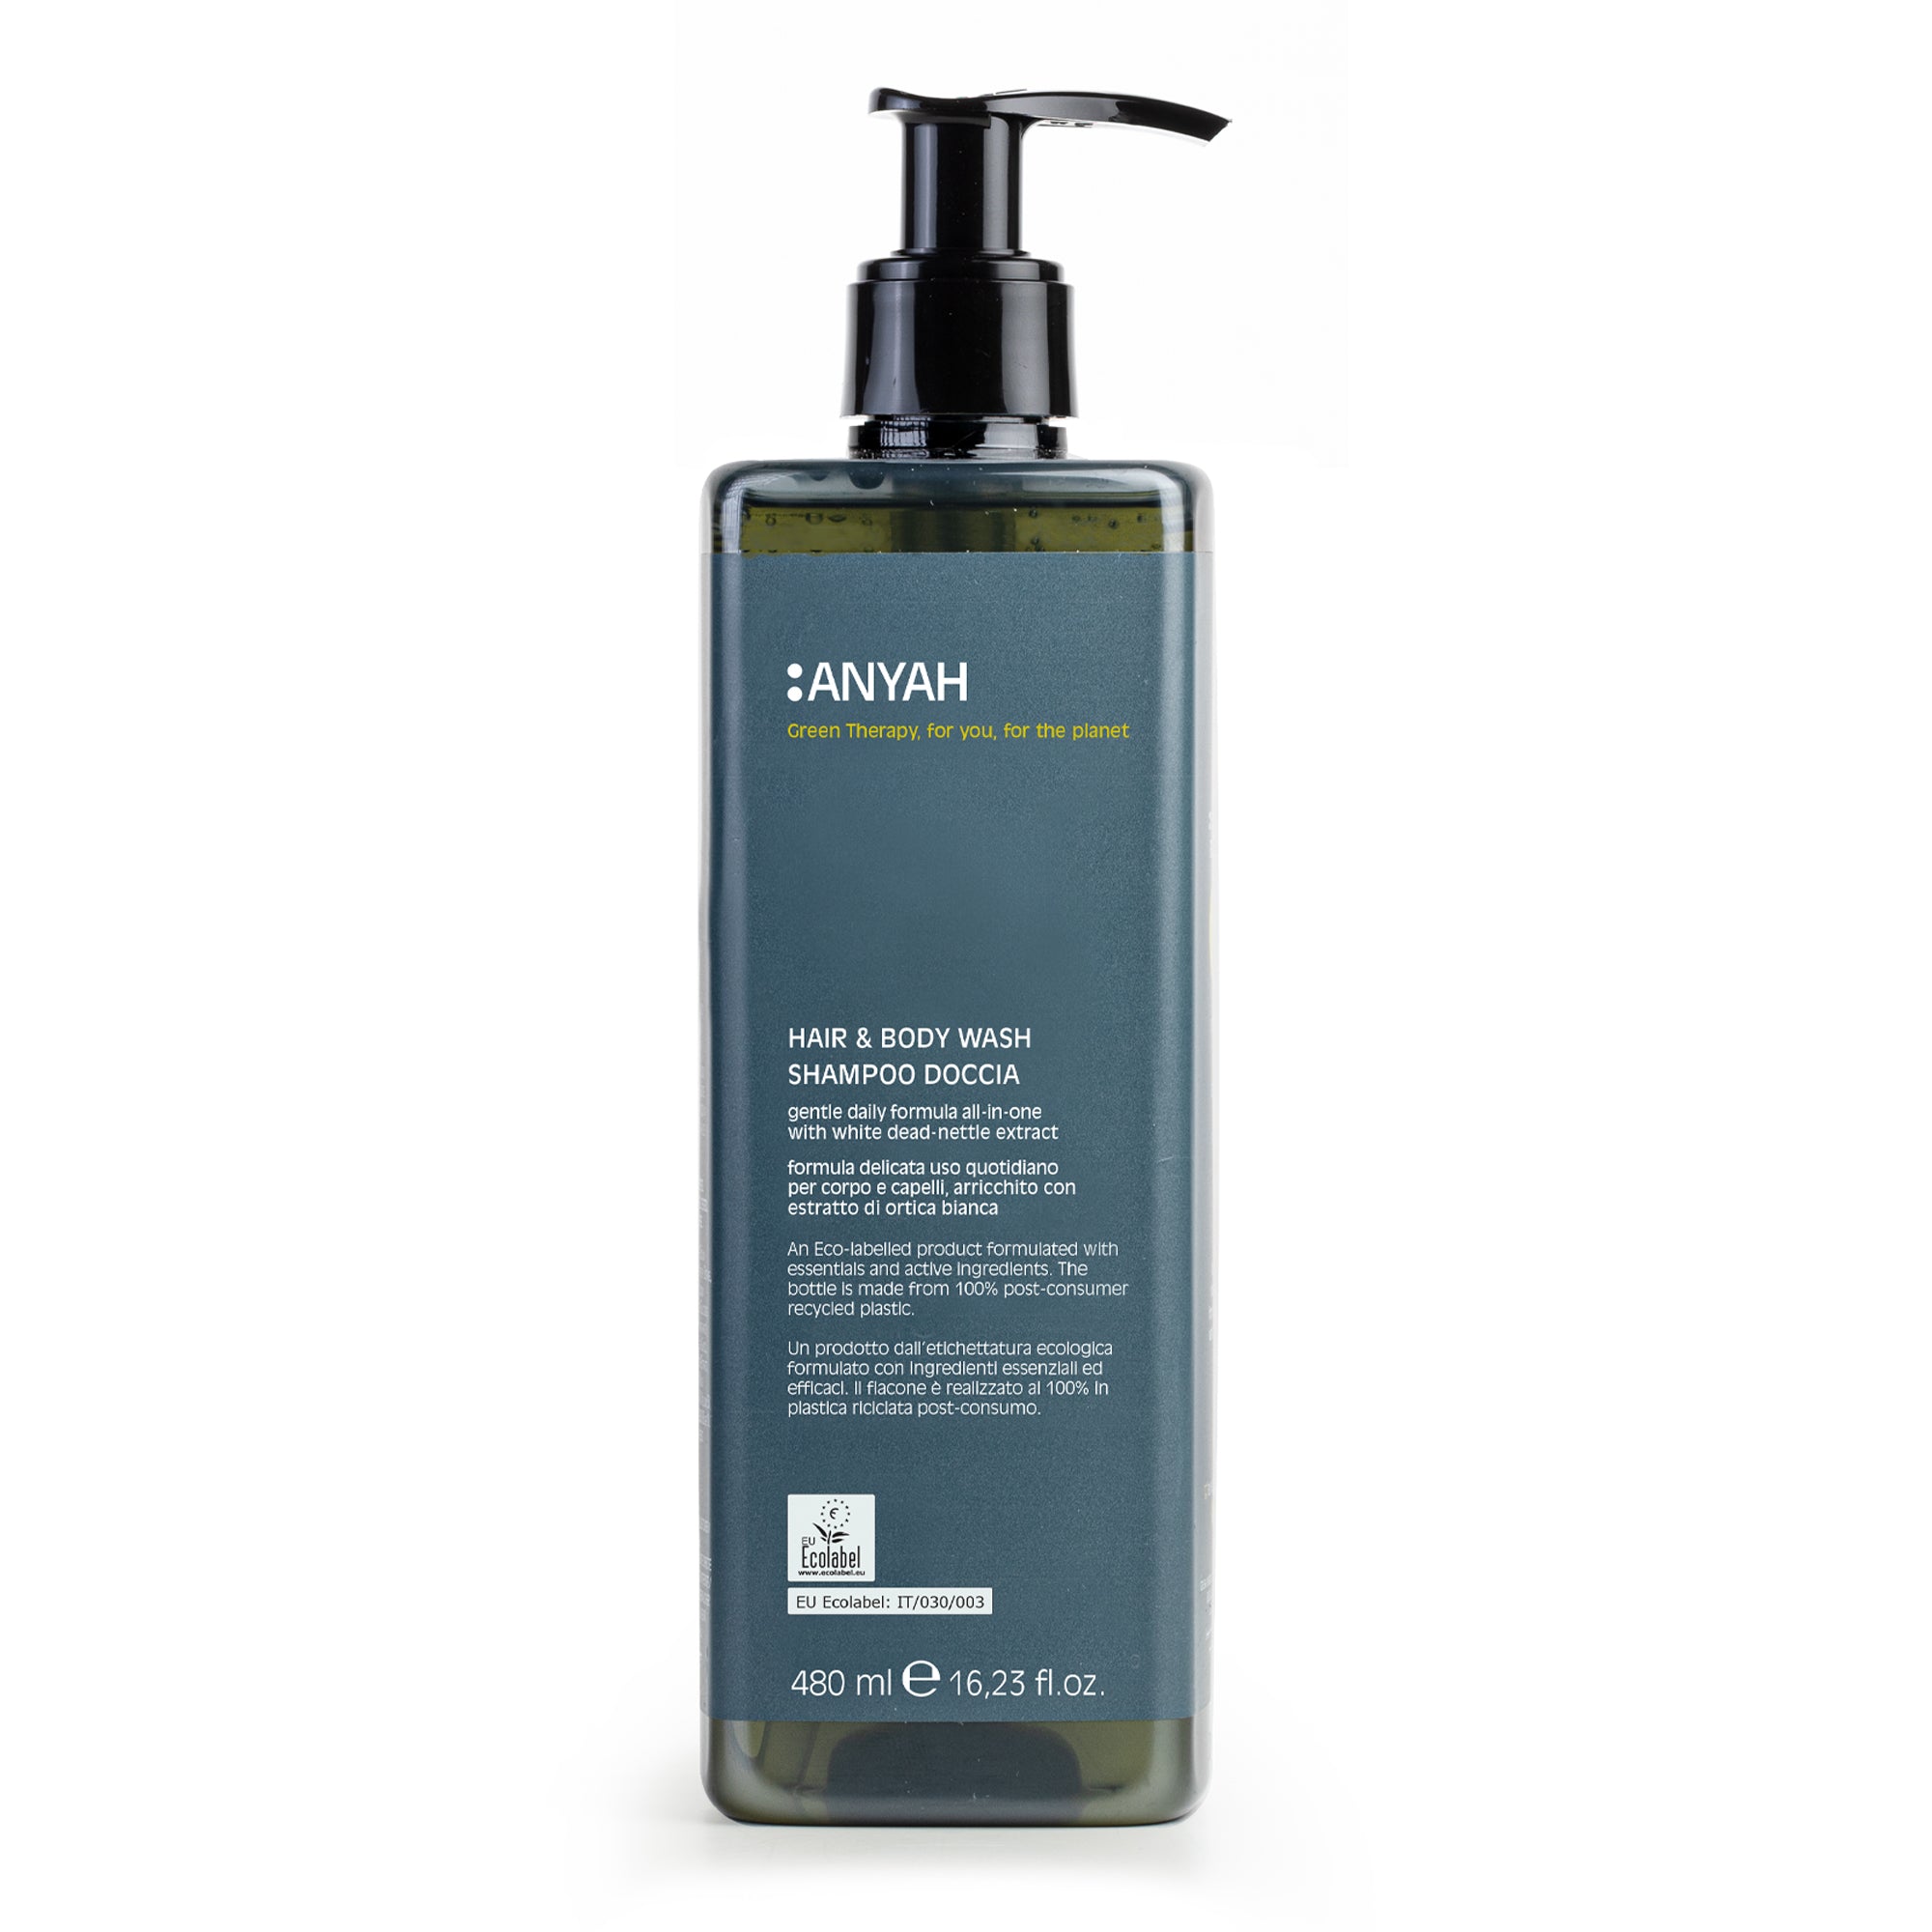 Anyah Gentle Hair & Body Wash Ecolabel Certified (480 ml)